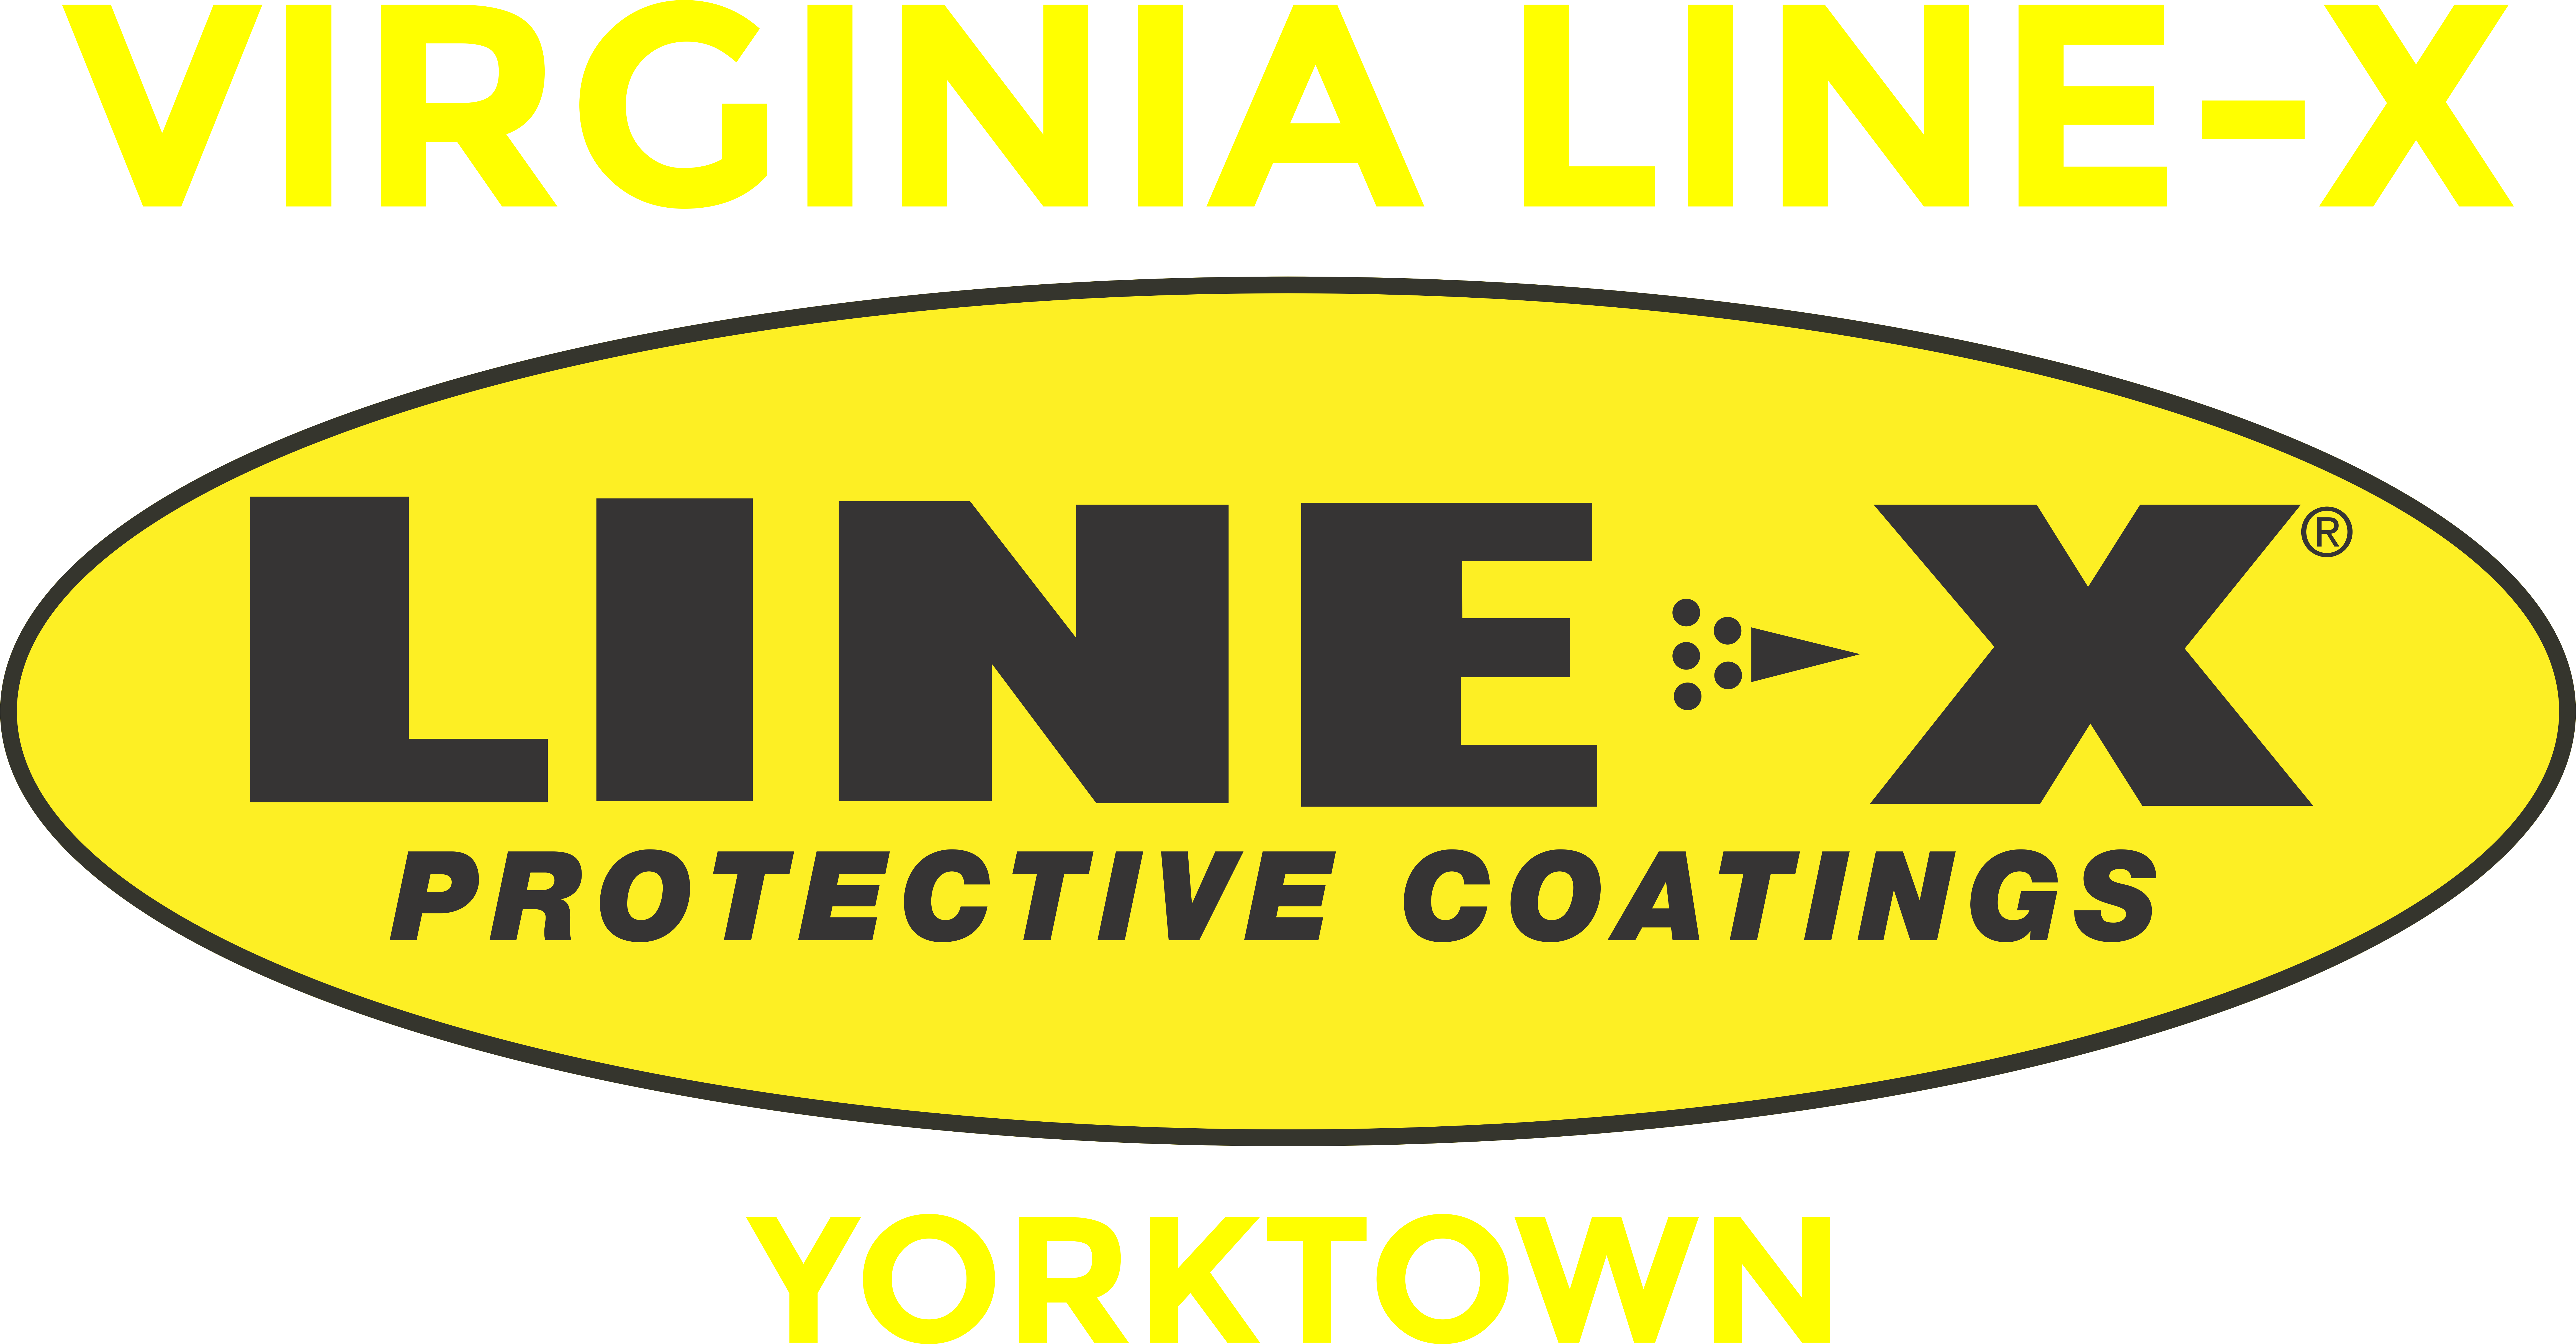 Virginia Line-X